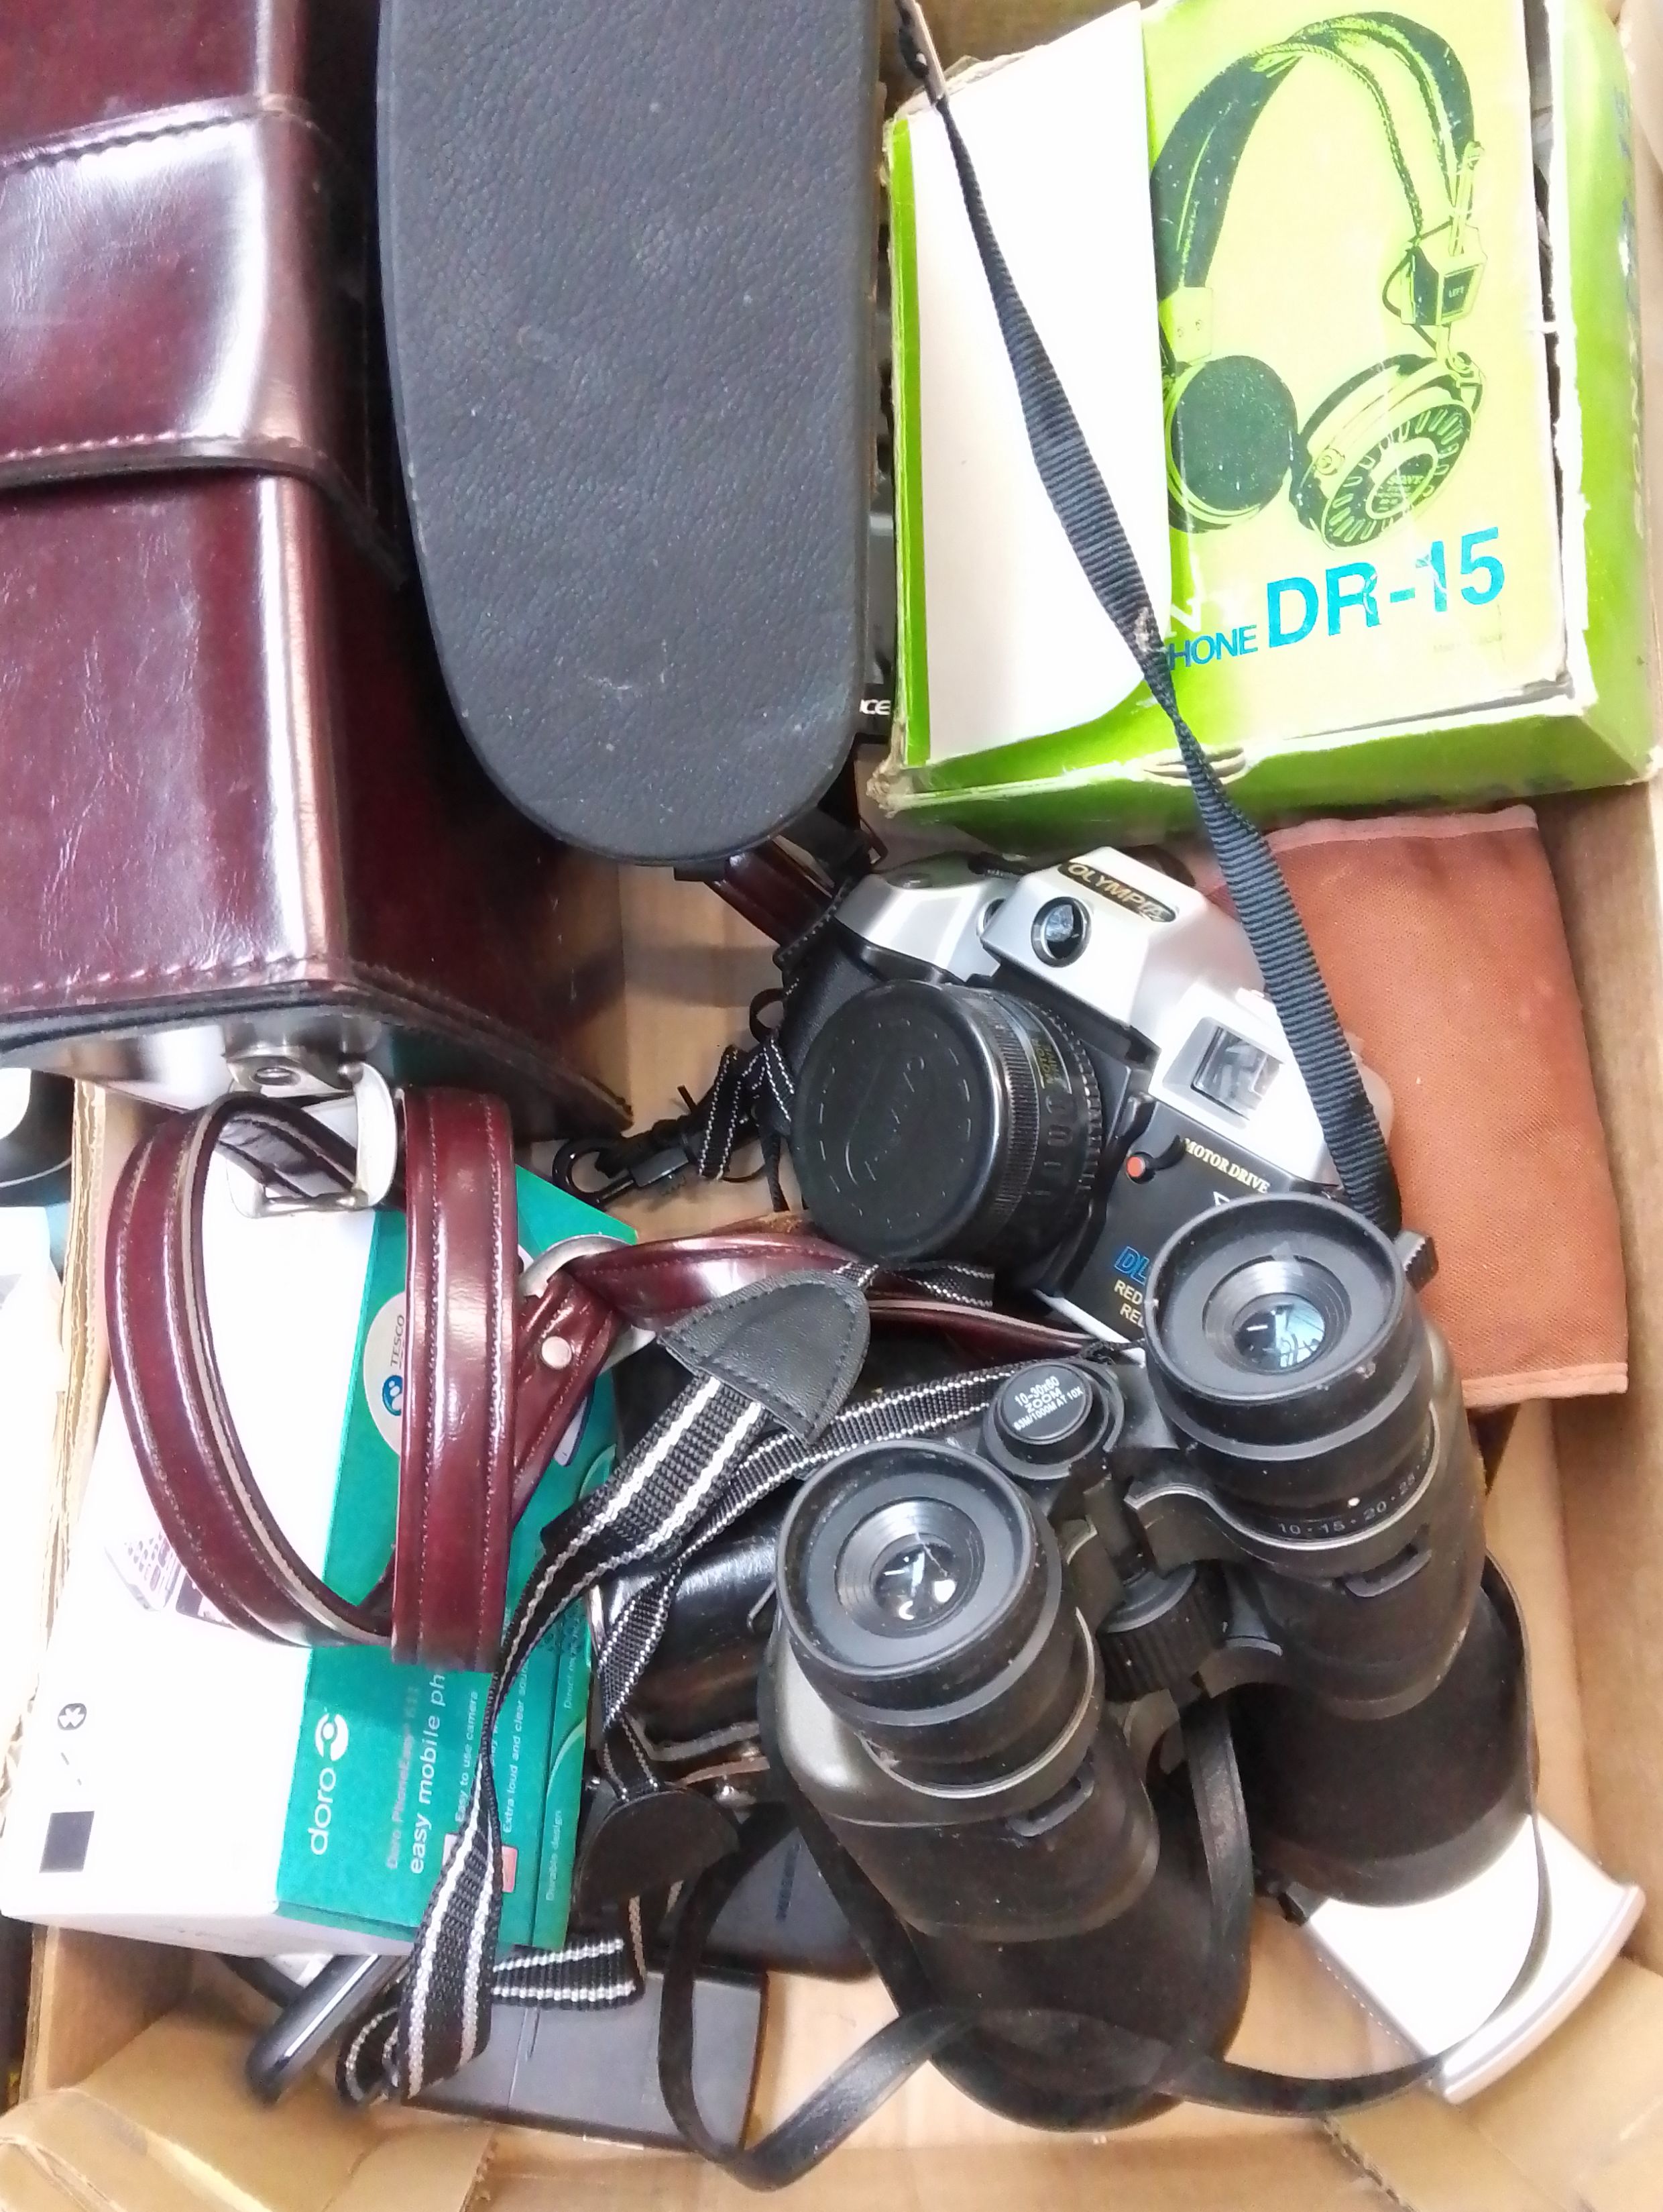 A box of cameras including Zenit, Olympia, binoculars, Acer tablet, headphones, Bolex cine camera